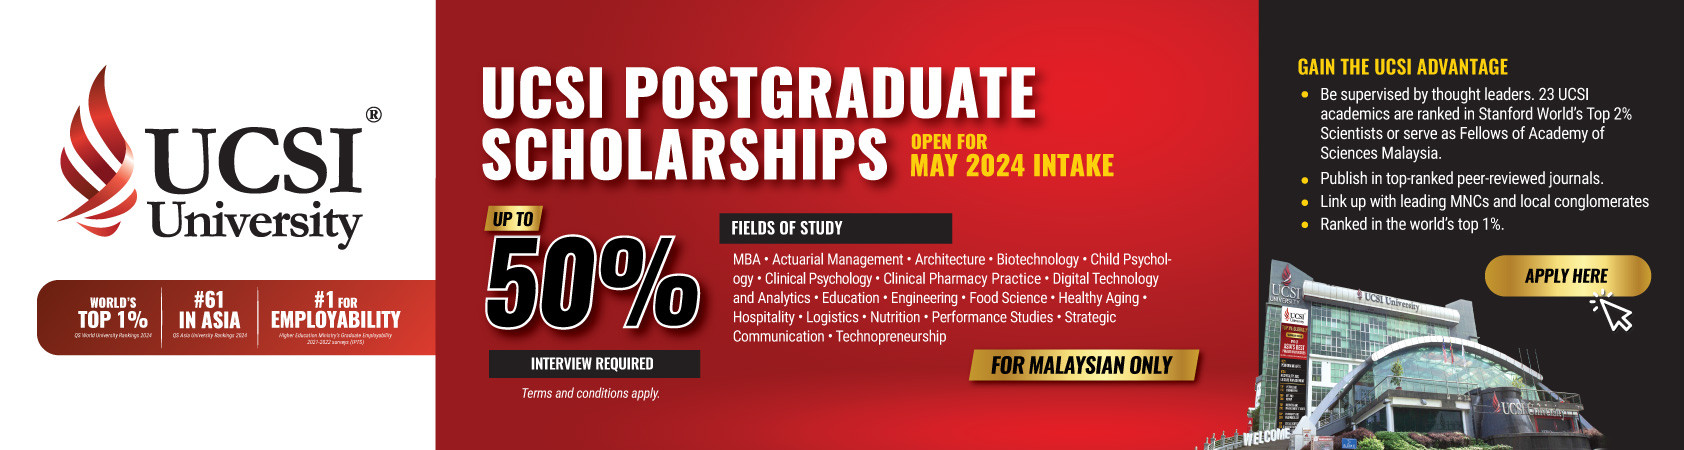 UCSI Postgraduate Scholarship